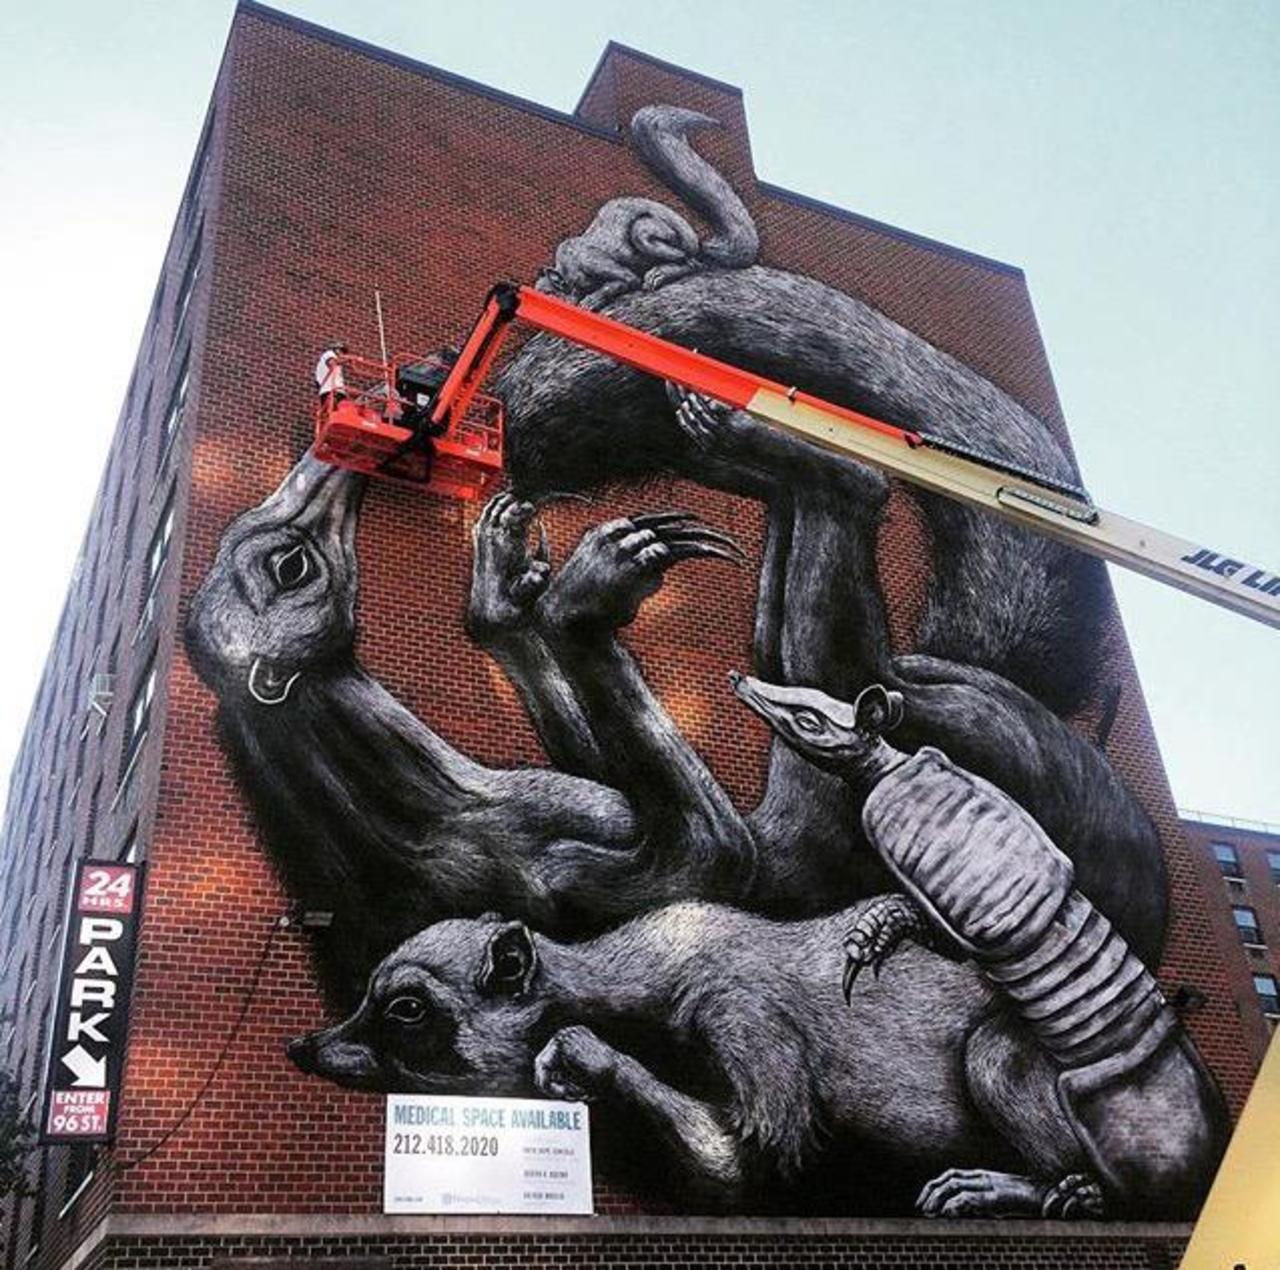 Street Art in progress by ROA in NYC

#art #graffiti #mural #streetart http://t.co/DVtCxmwFwm